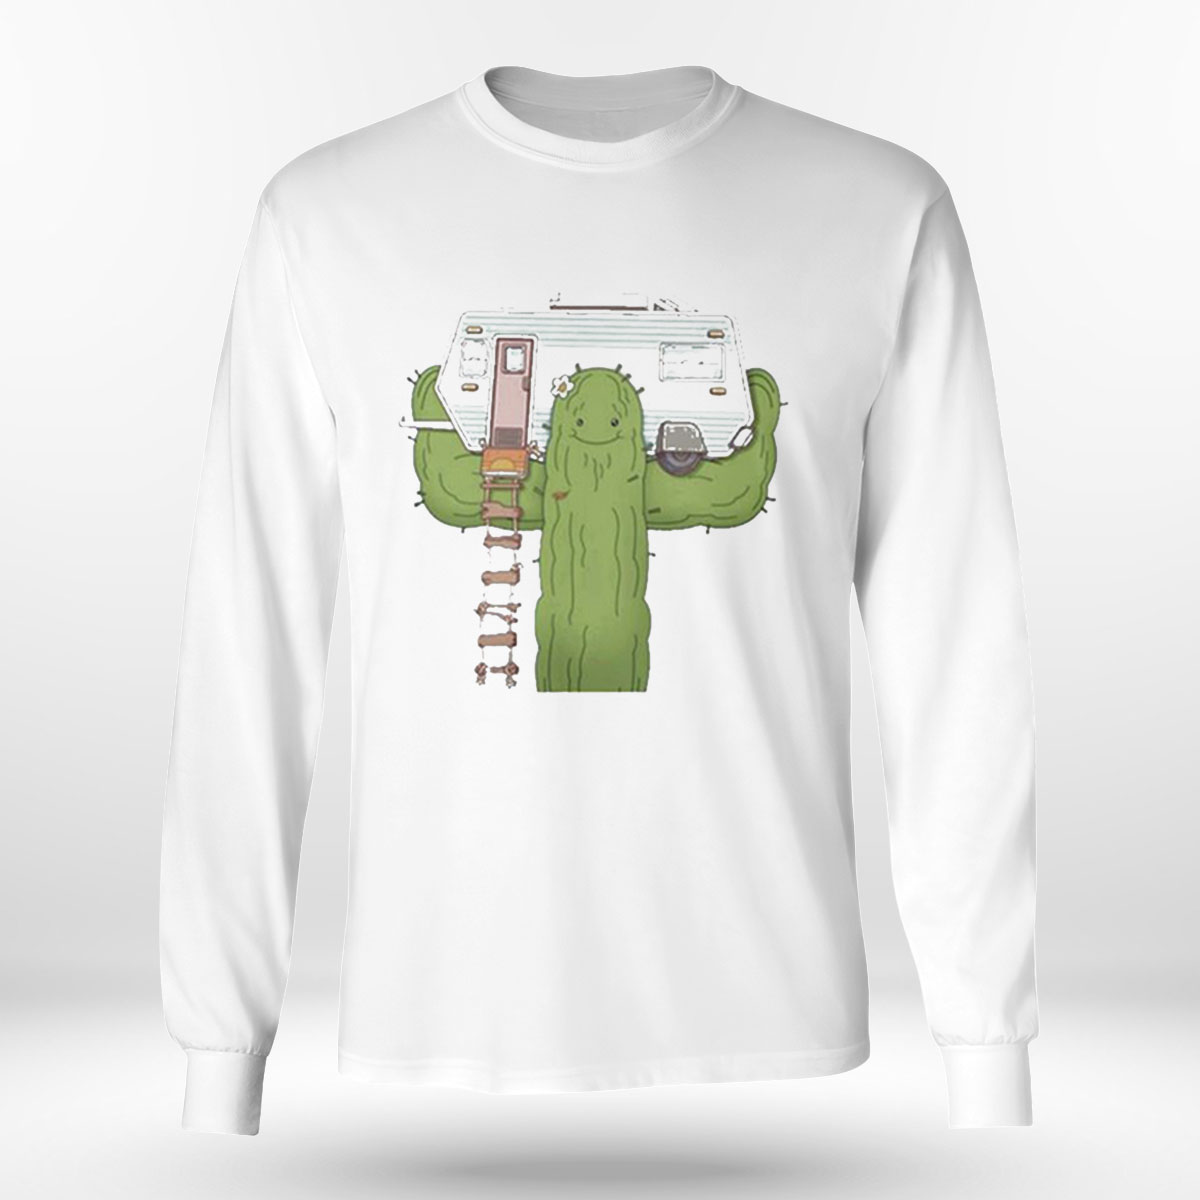 Cactus House Theodd1sout Oddballs Shirt Ladies T-shirt